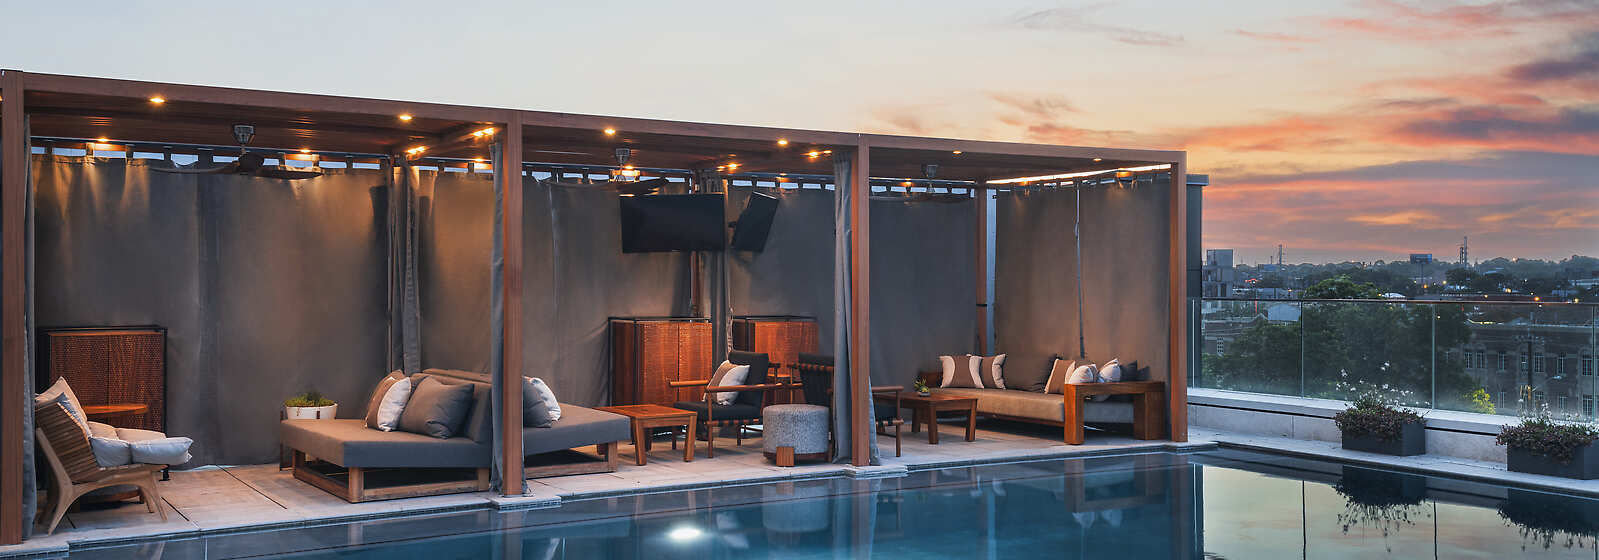 Enjoy a VIP cabana experience at Cenote pool deck